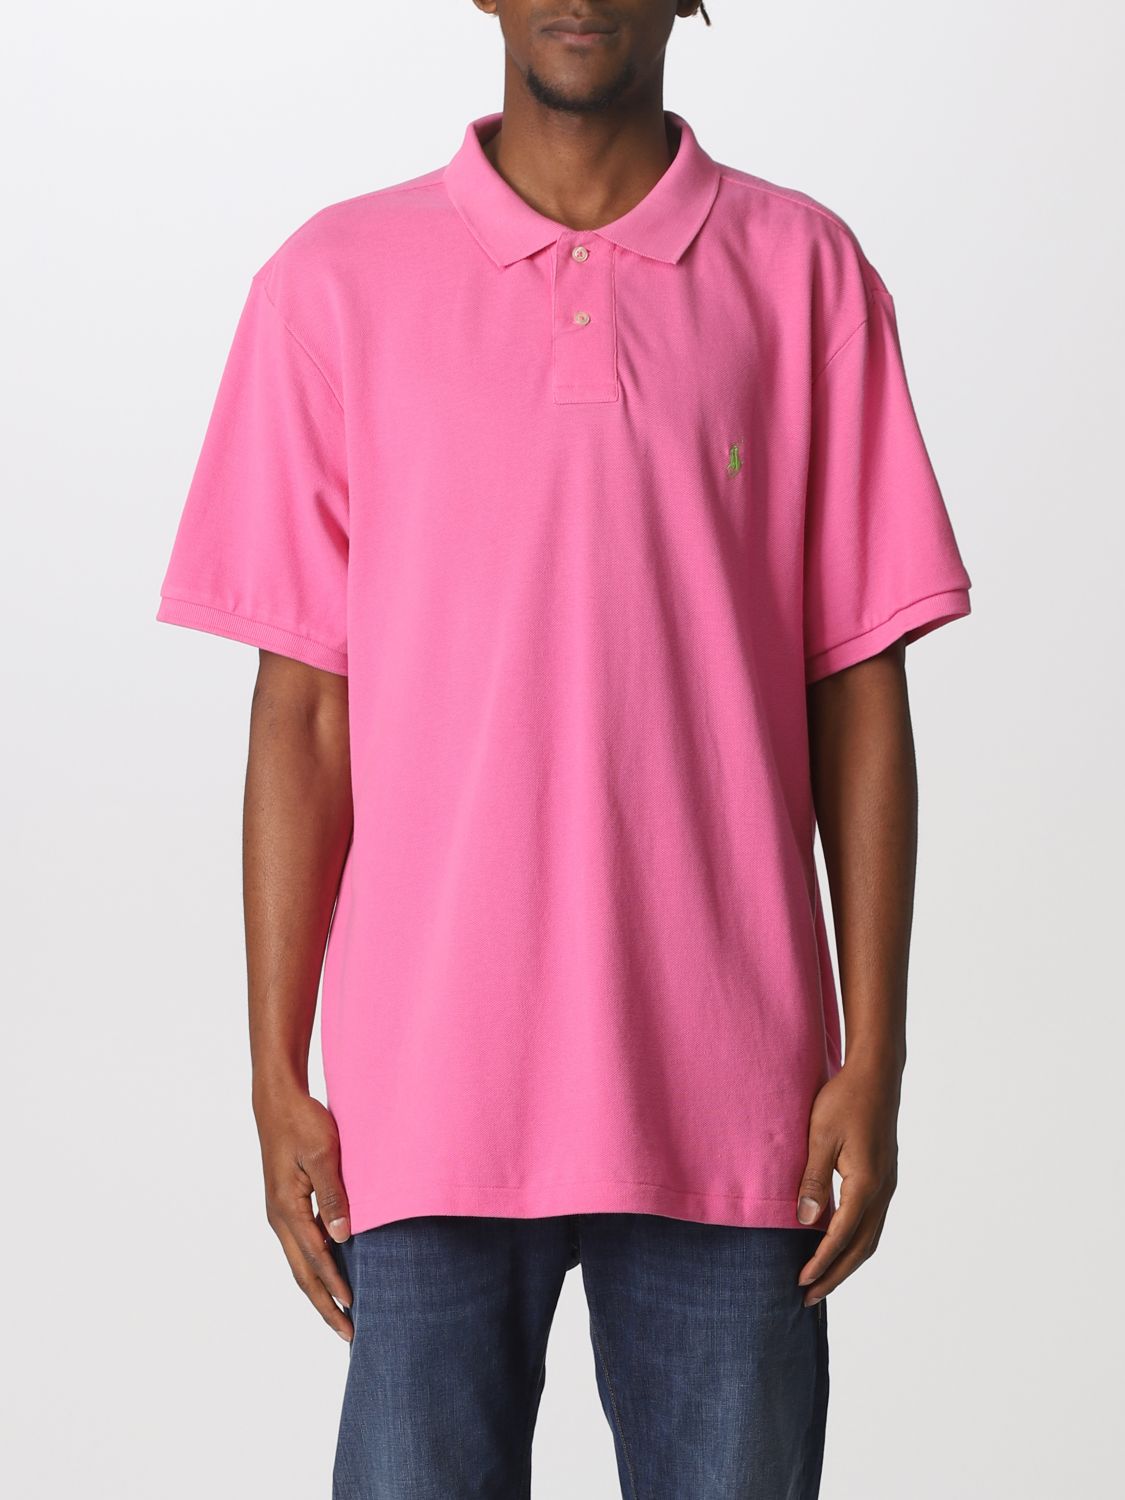 Polo Polo Ralph Lauren: Polo Polo Ralph Lauren in cotone con logo rosa 1